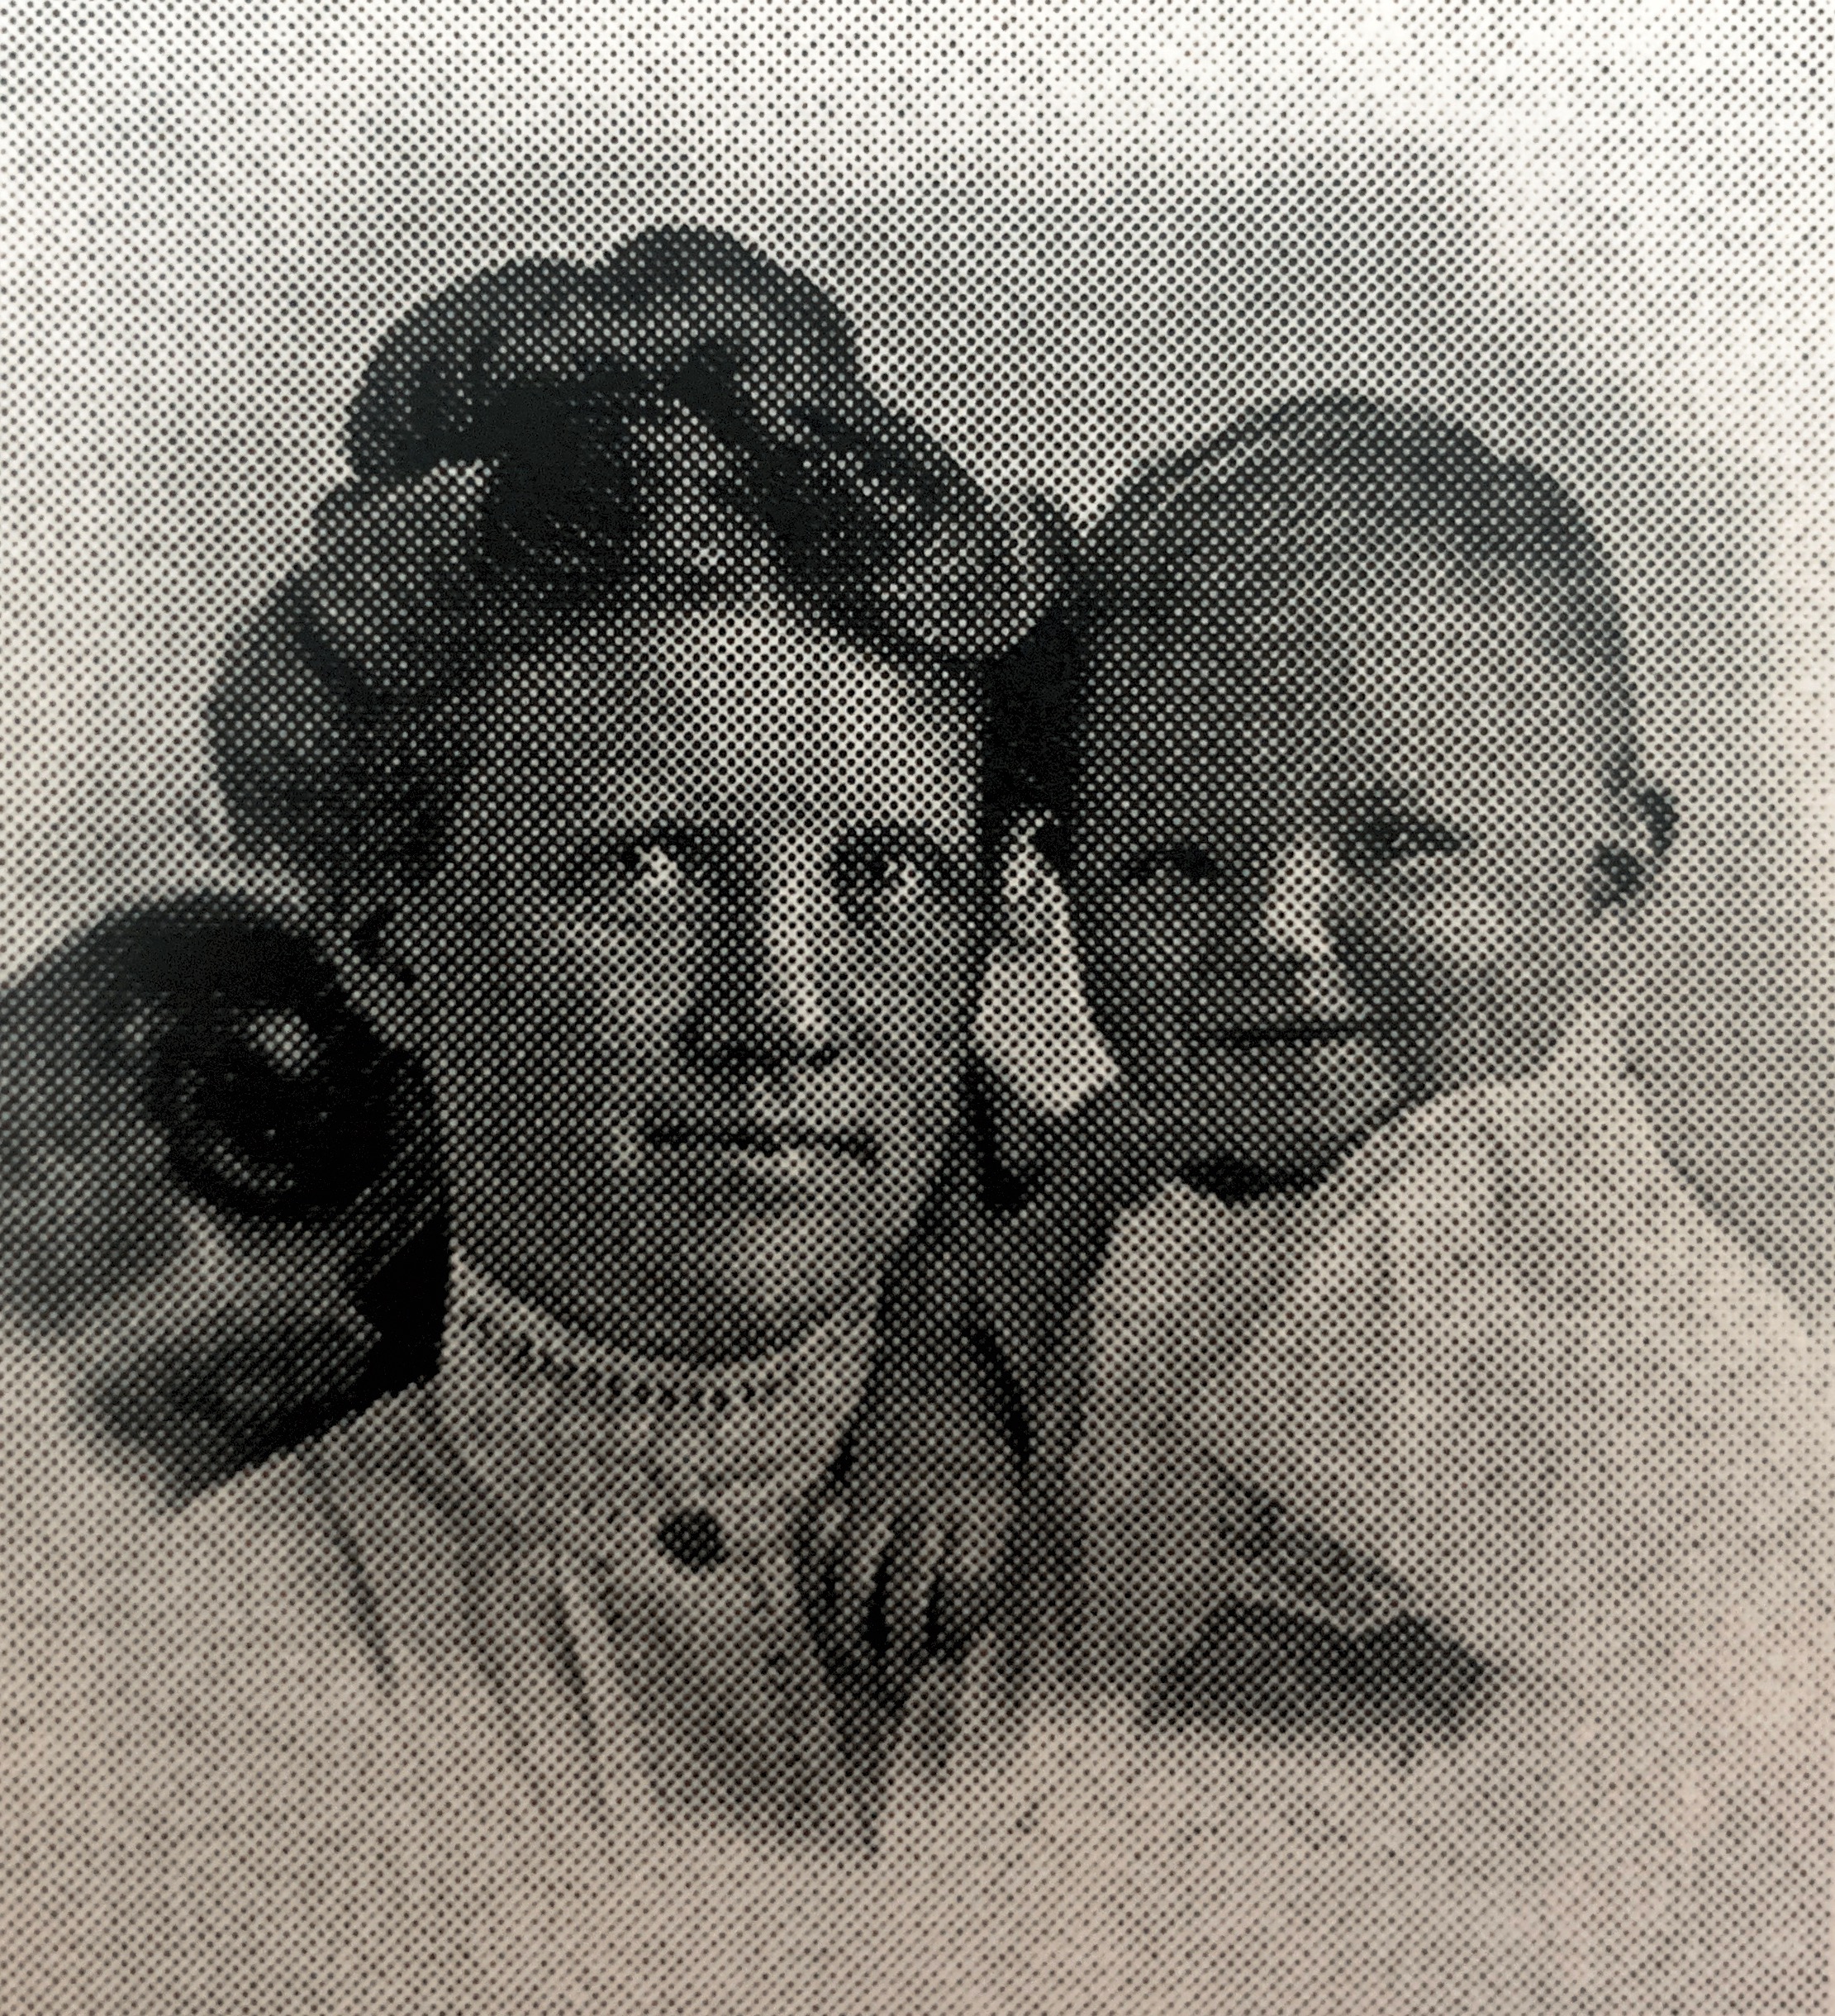 Clara and Evelyn Haukom, circa 1907